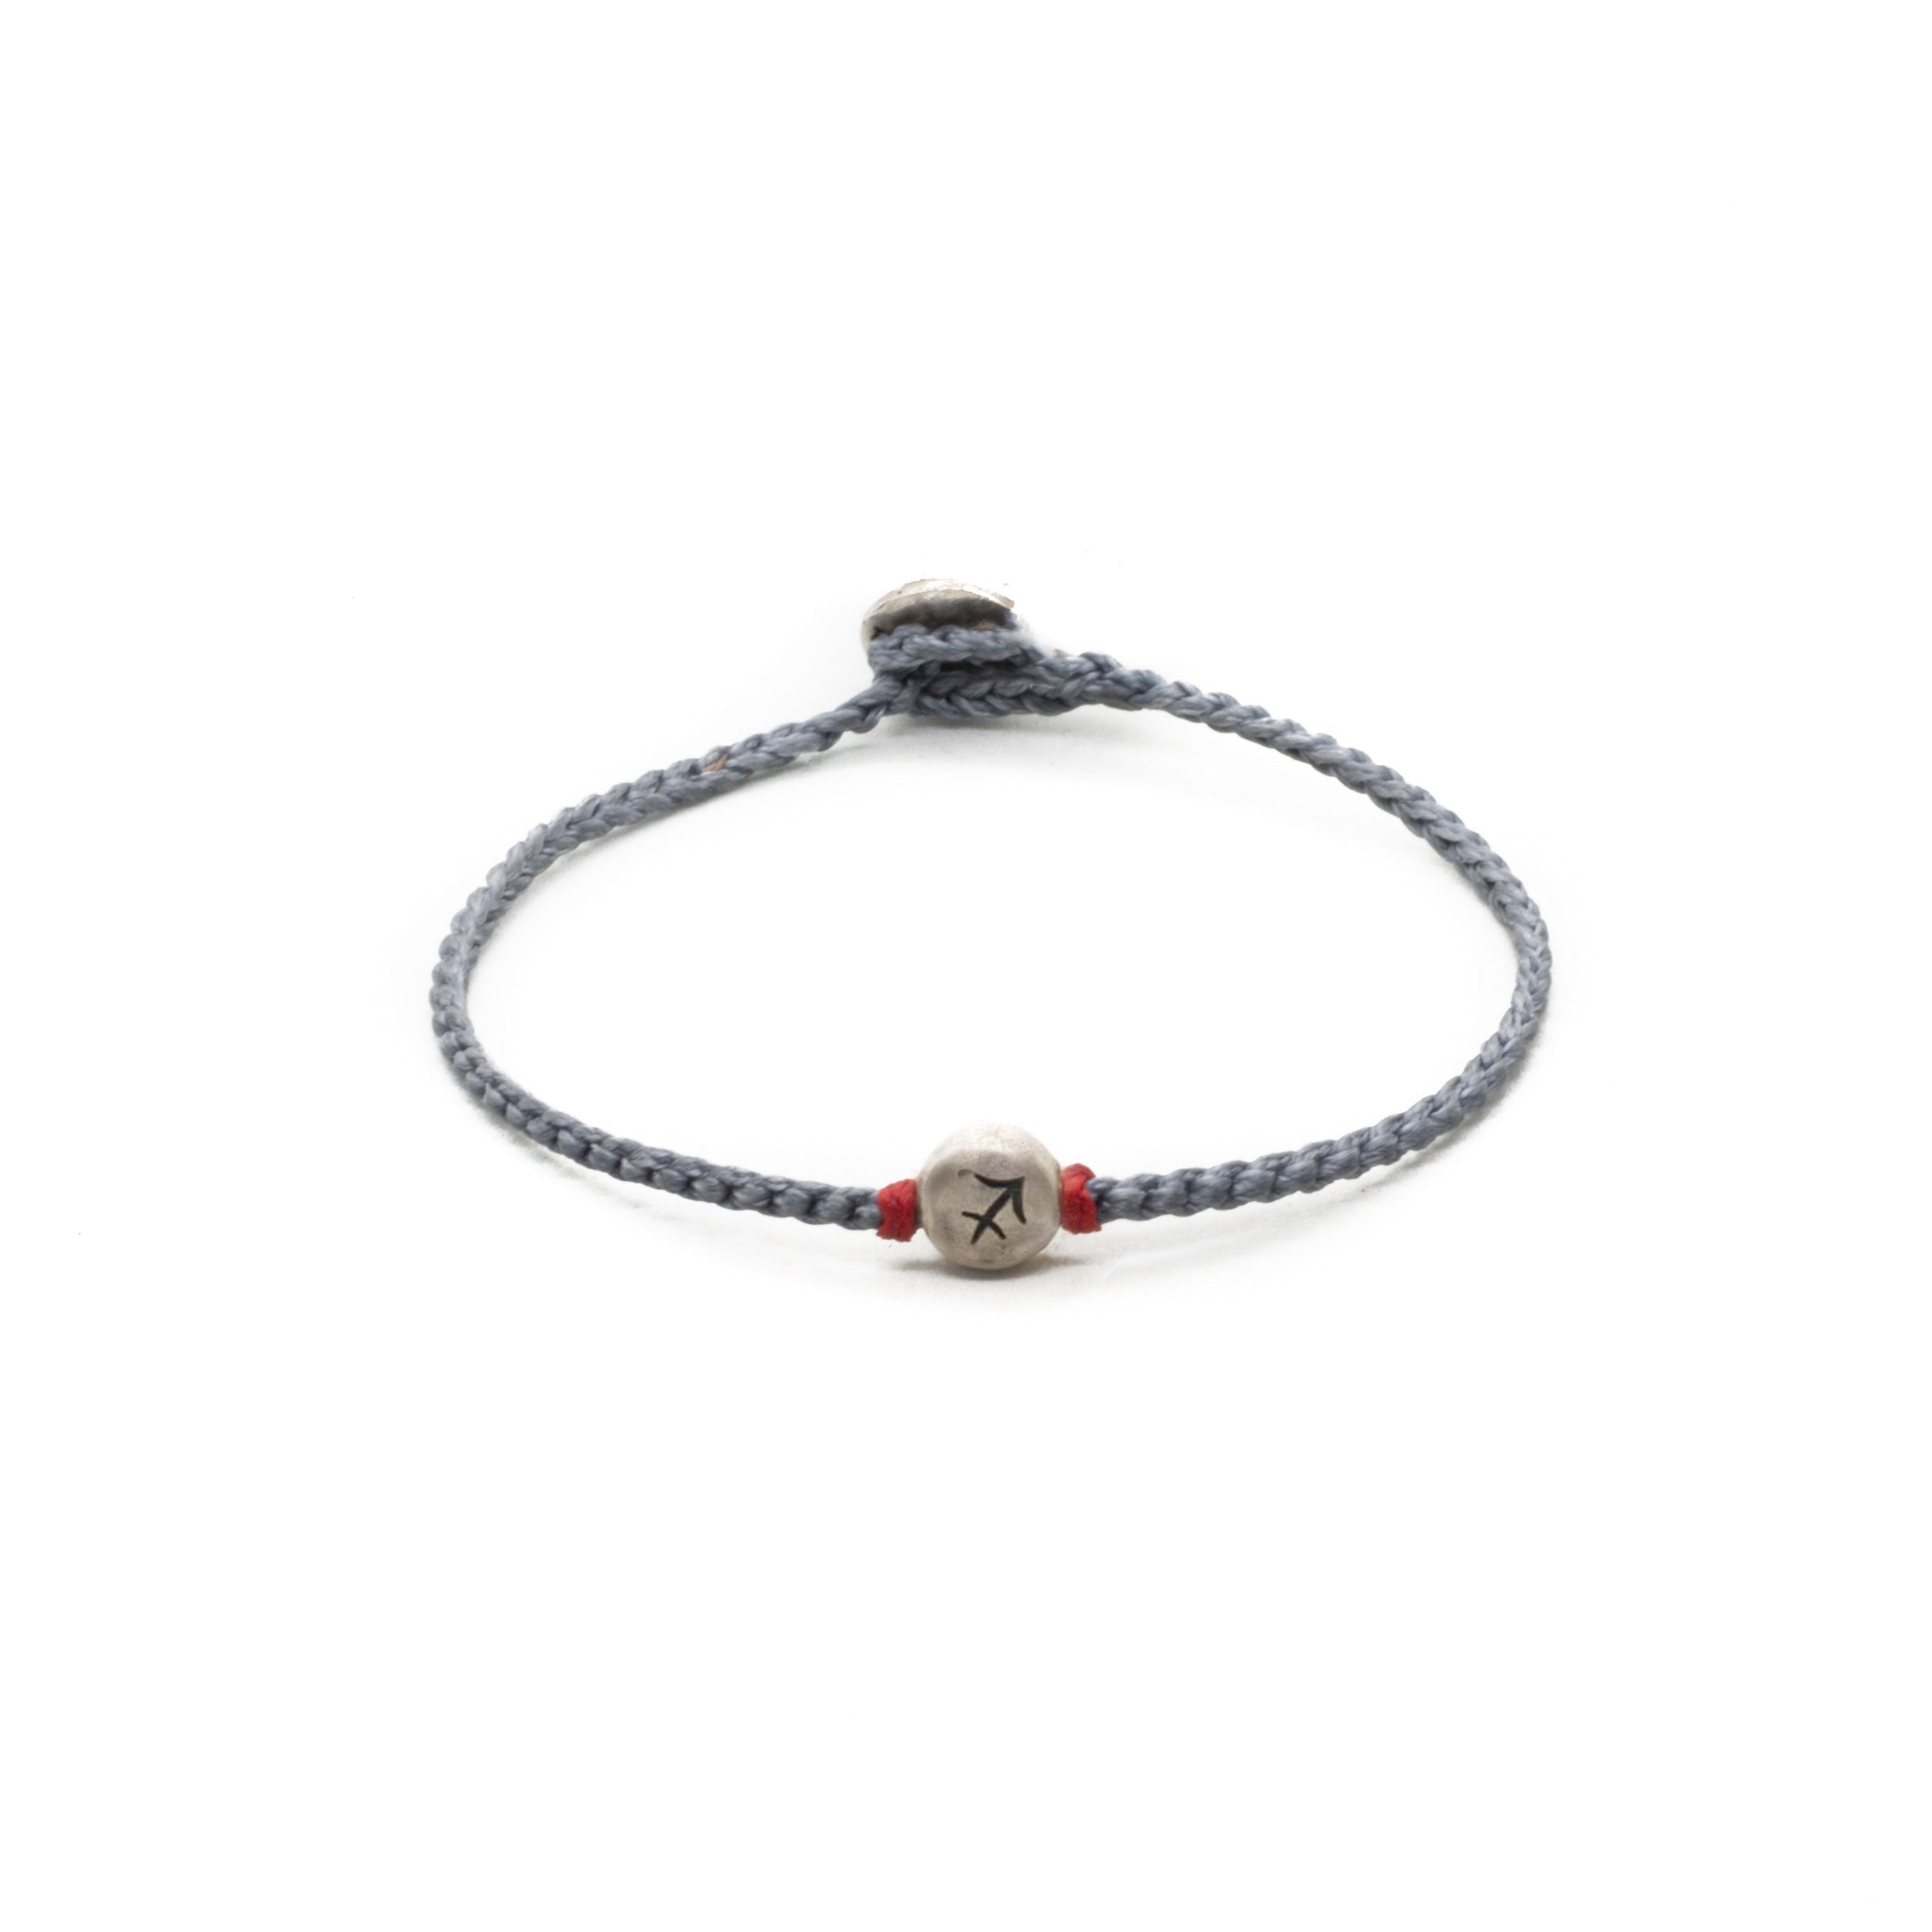 Silver Sagittarius zodiac sign bracelet with grey hand braided chain.